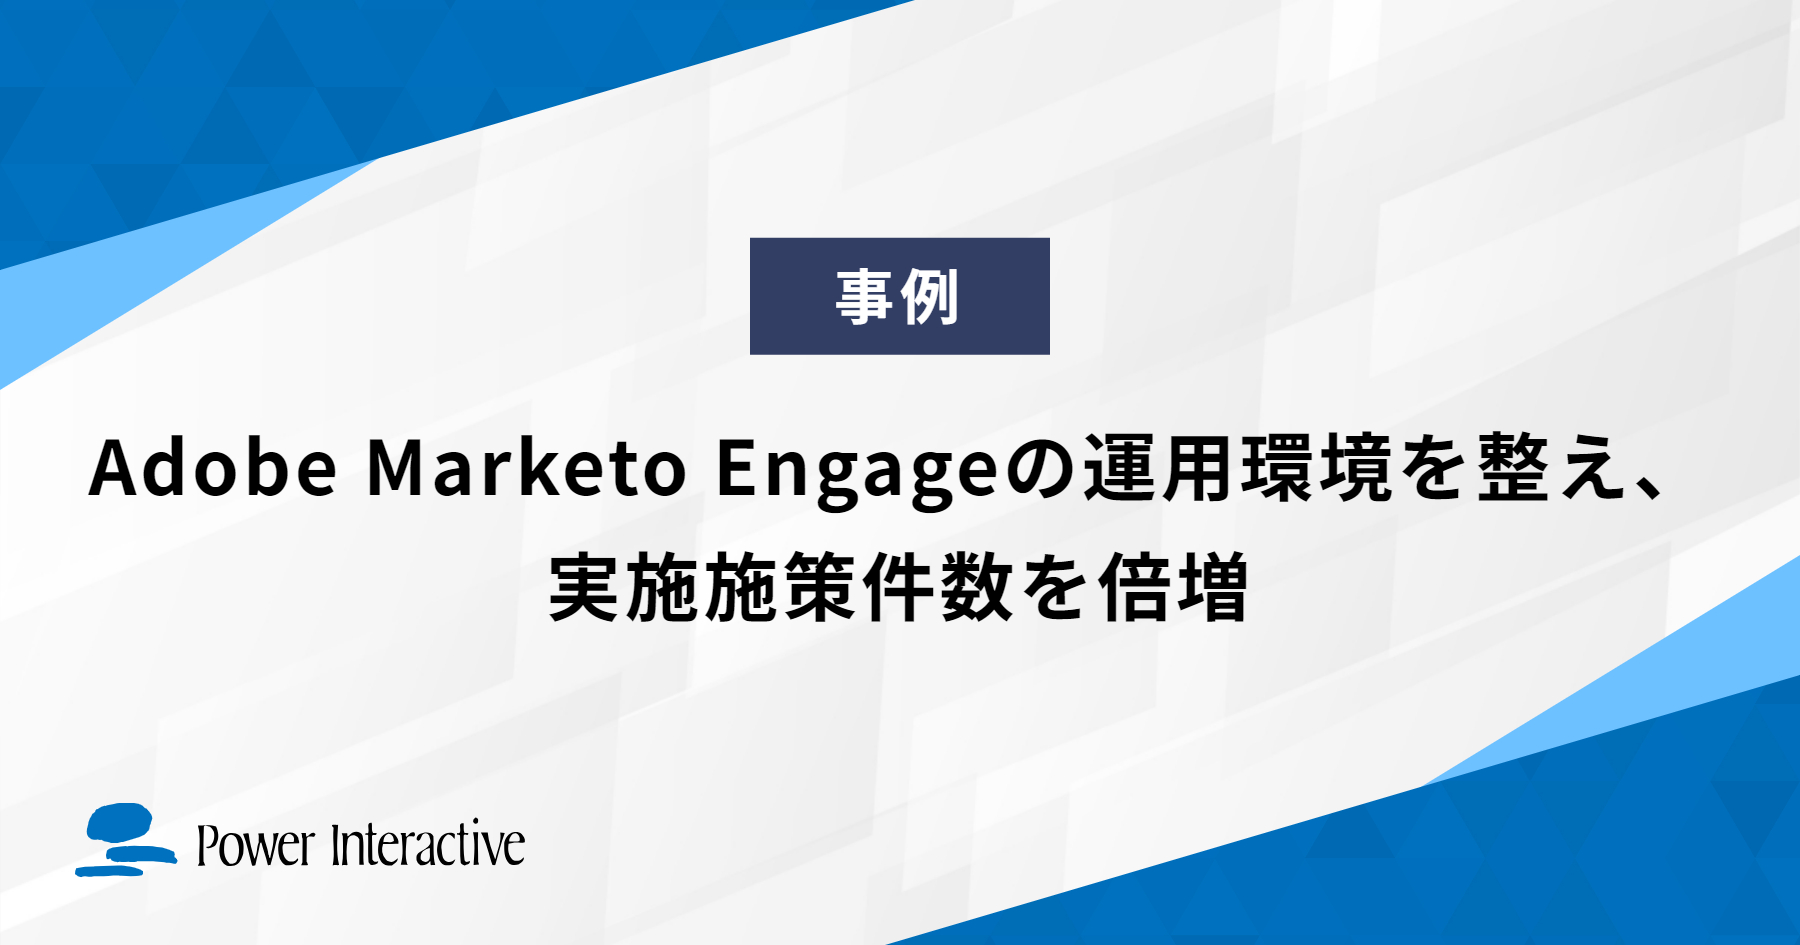 Adobe Marketo Engageの運用環境を整え、実施施策件数を倍増